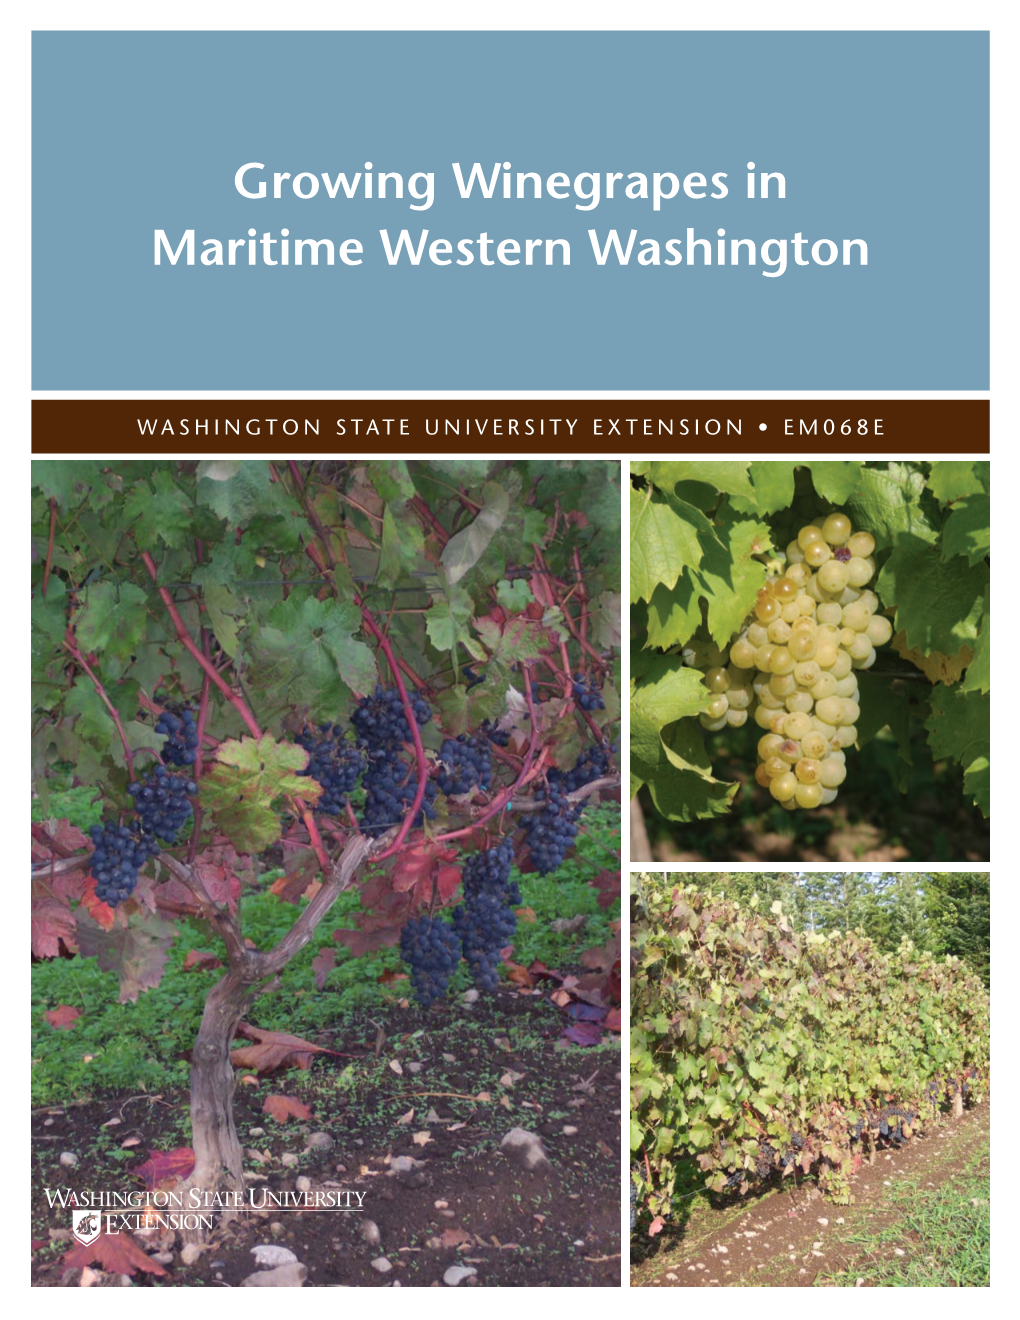 Growing Winegrapes in Maritime Western Washington